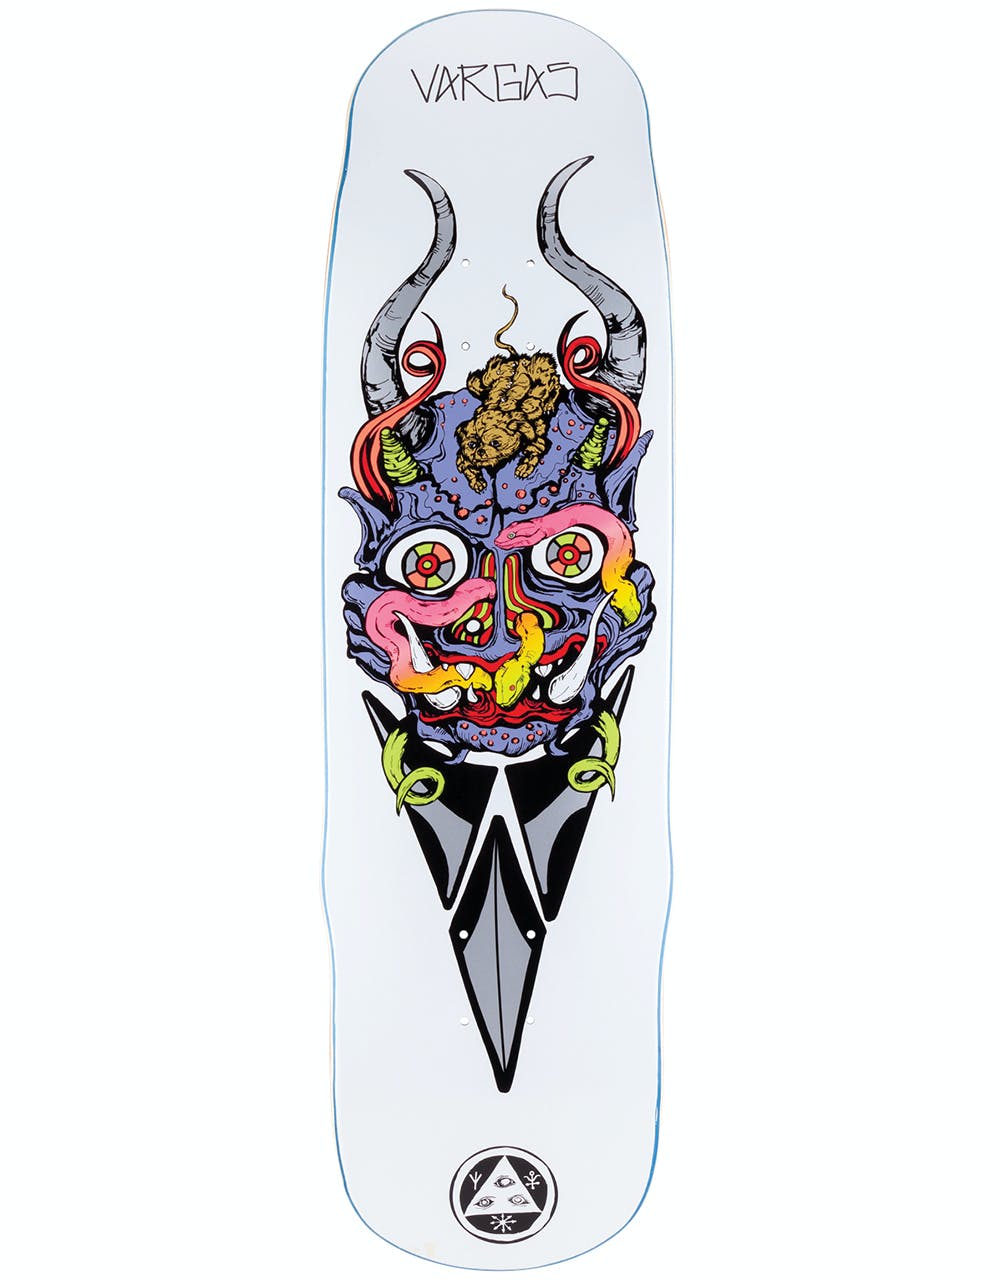 Welcome Vargas Maligno on Effigy Skateboard Deck - 8.8"